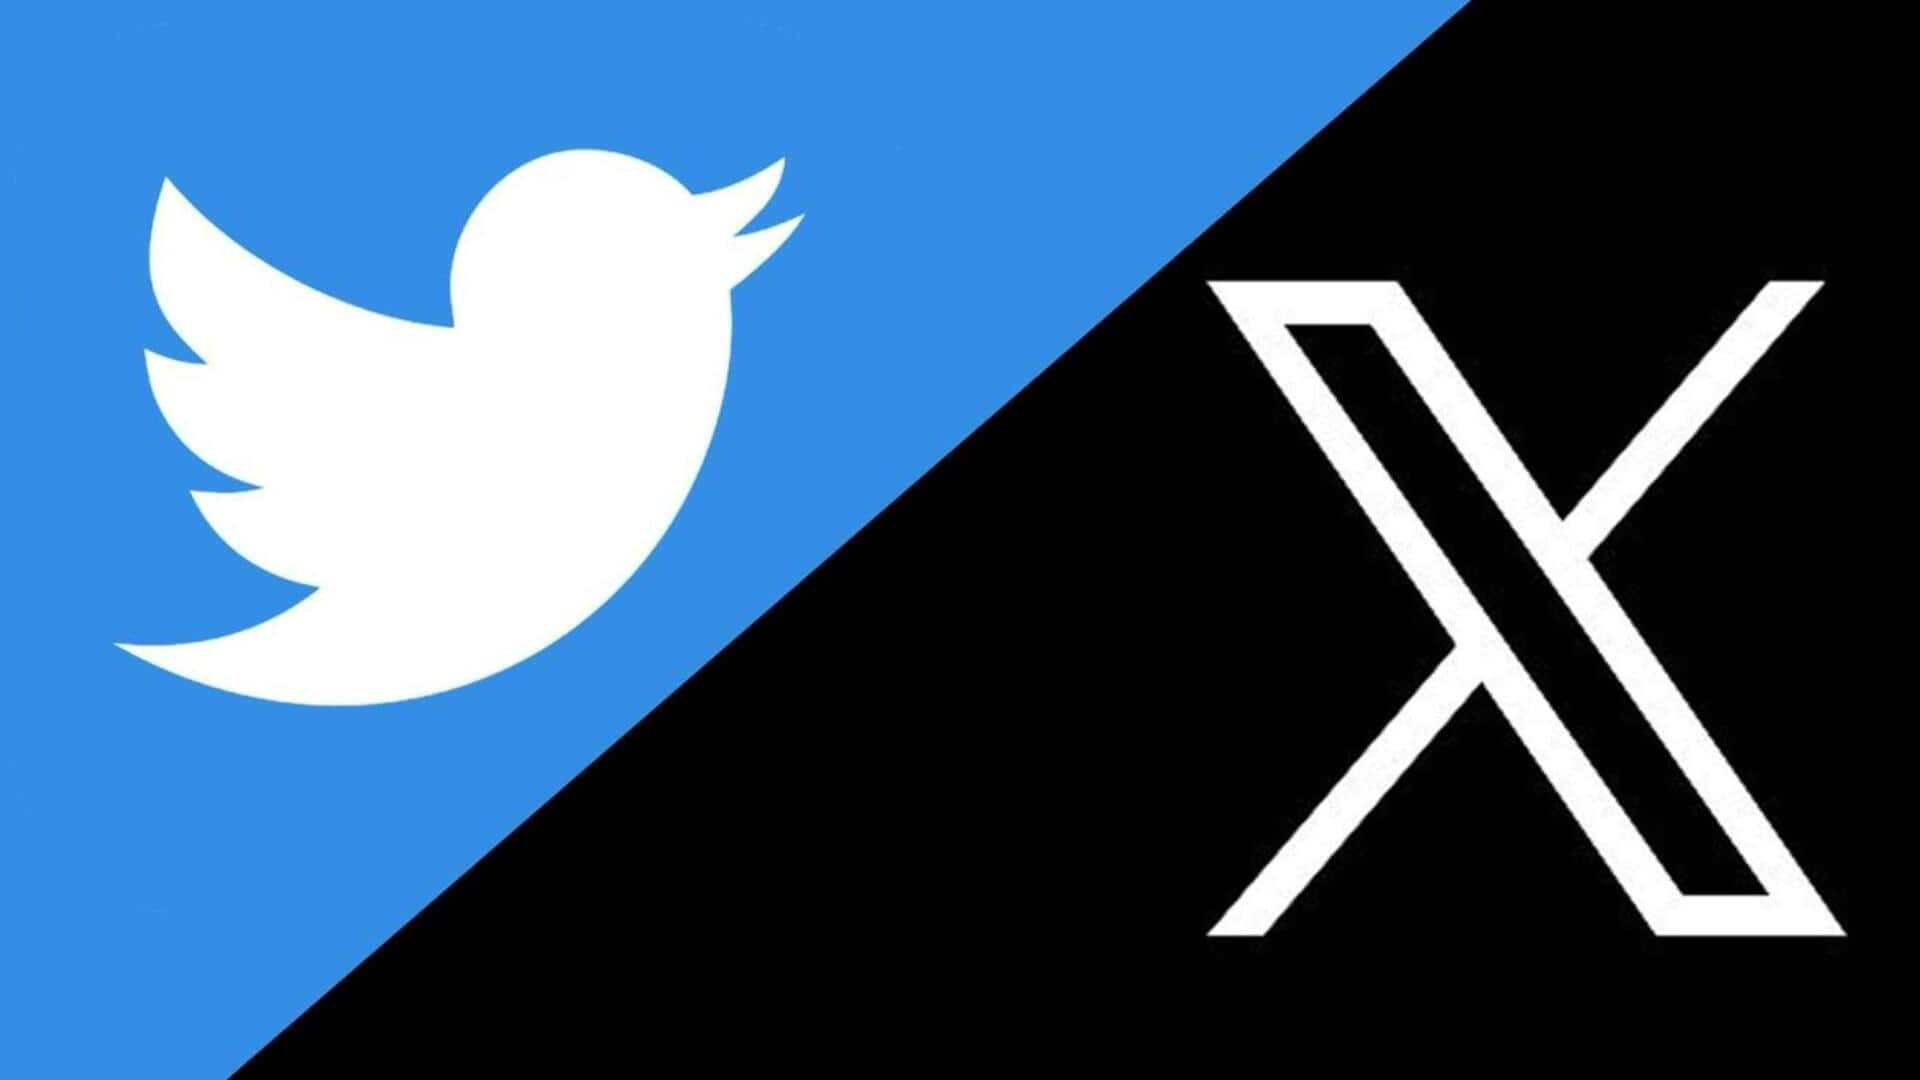 एलन मस्क ने सब्सक्रिप्शन सेवा ट्विटर ब्लू का बदला नाम, अब कहा जायेगा X प्रीमियम